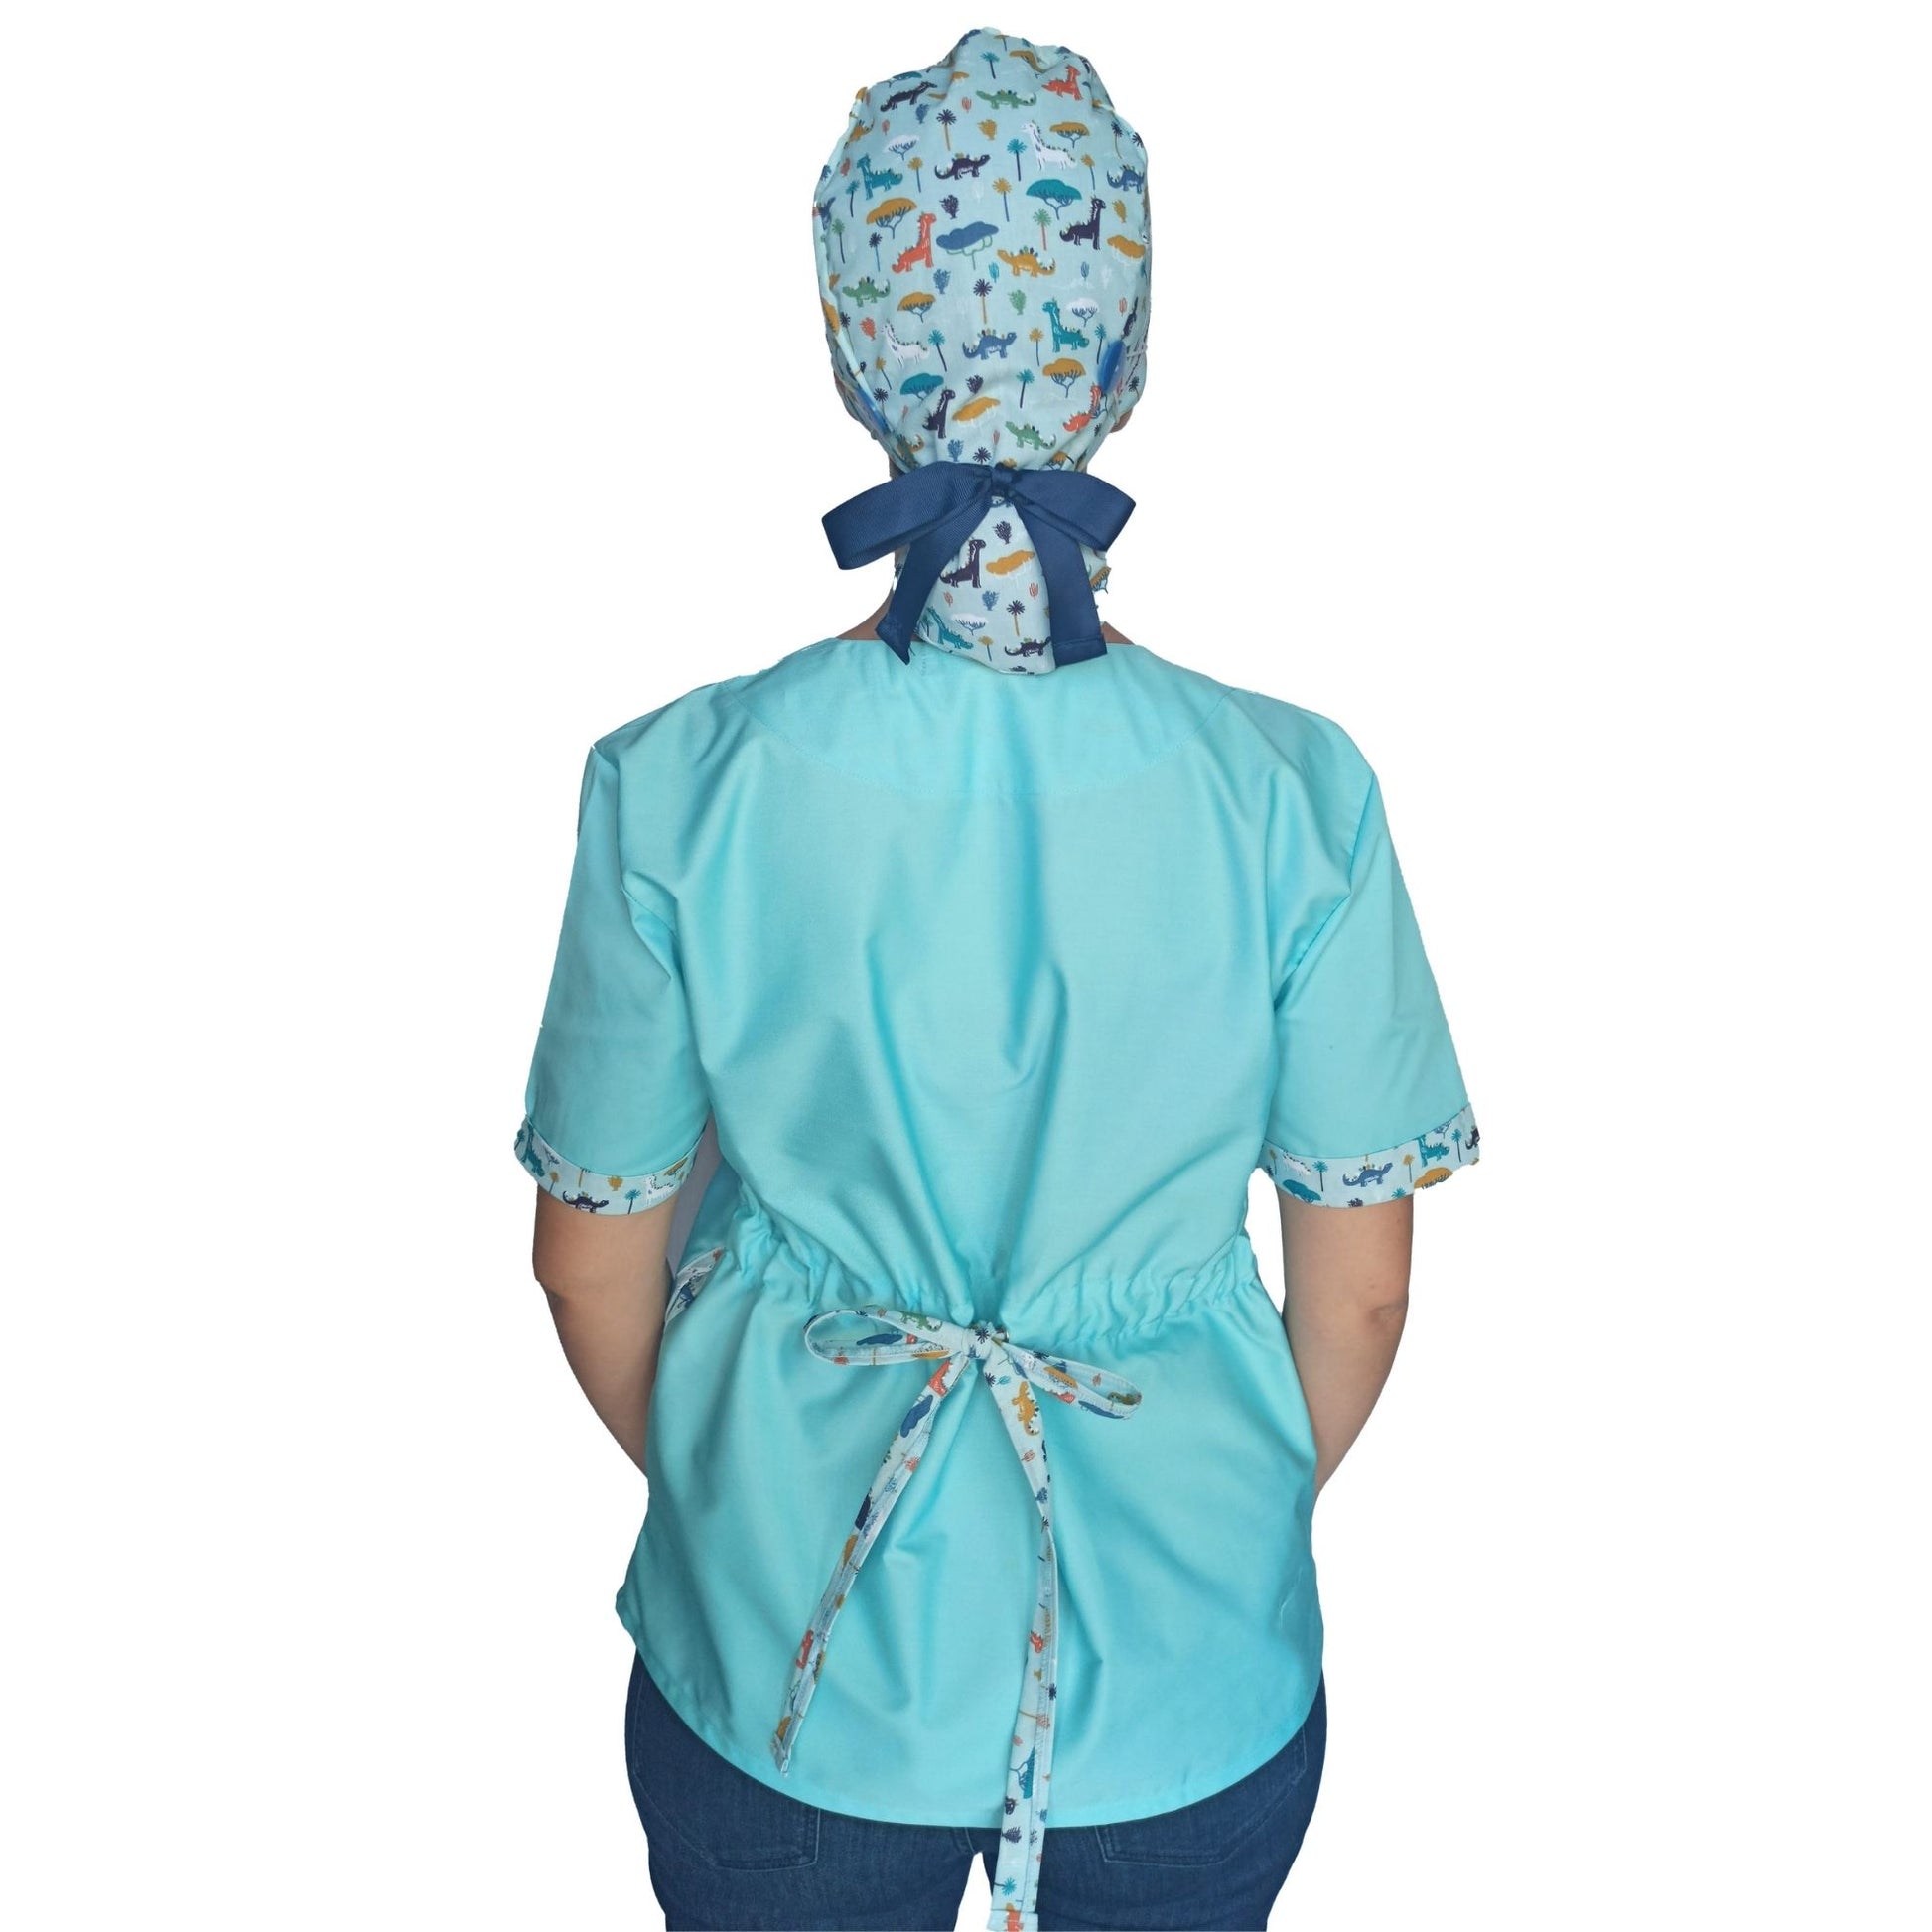 Scrub Top for Nurses with Dinos print details - [scrub_hat]-[scrub_cap_for_women]-[surgical_cap]